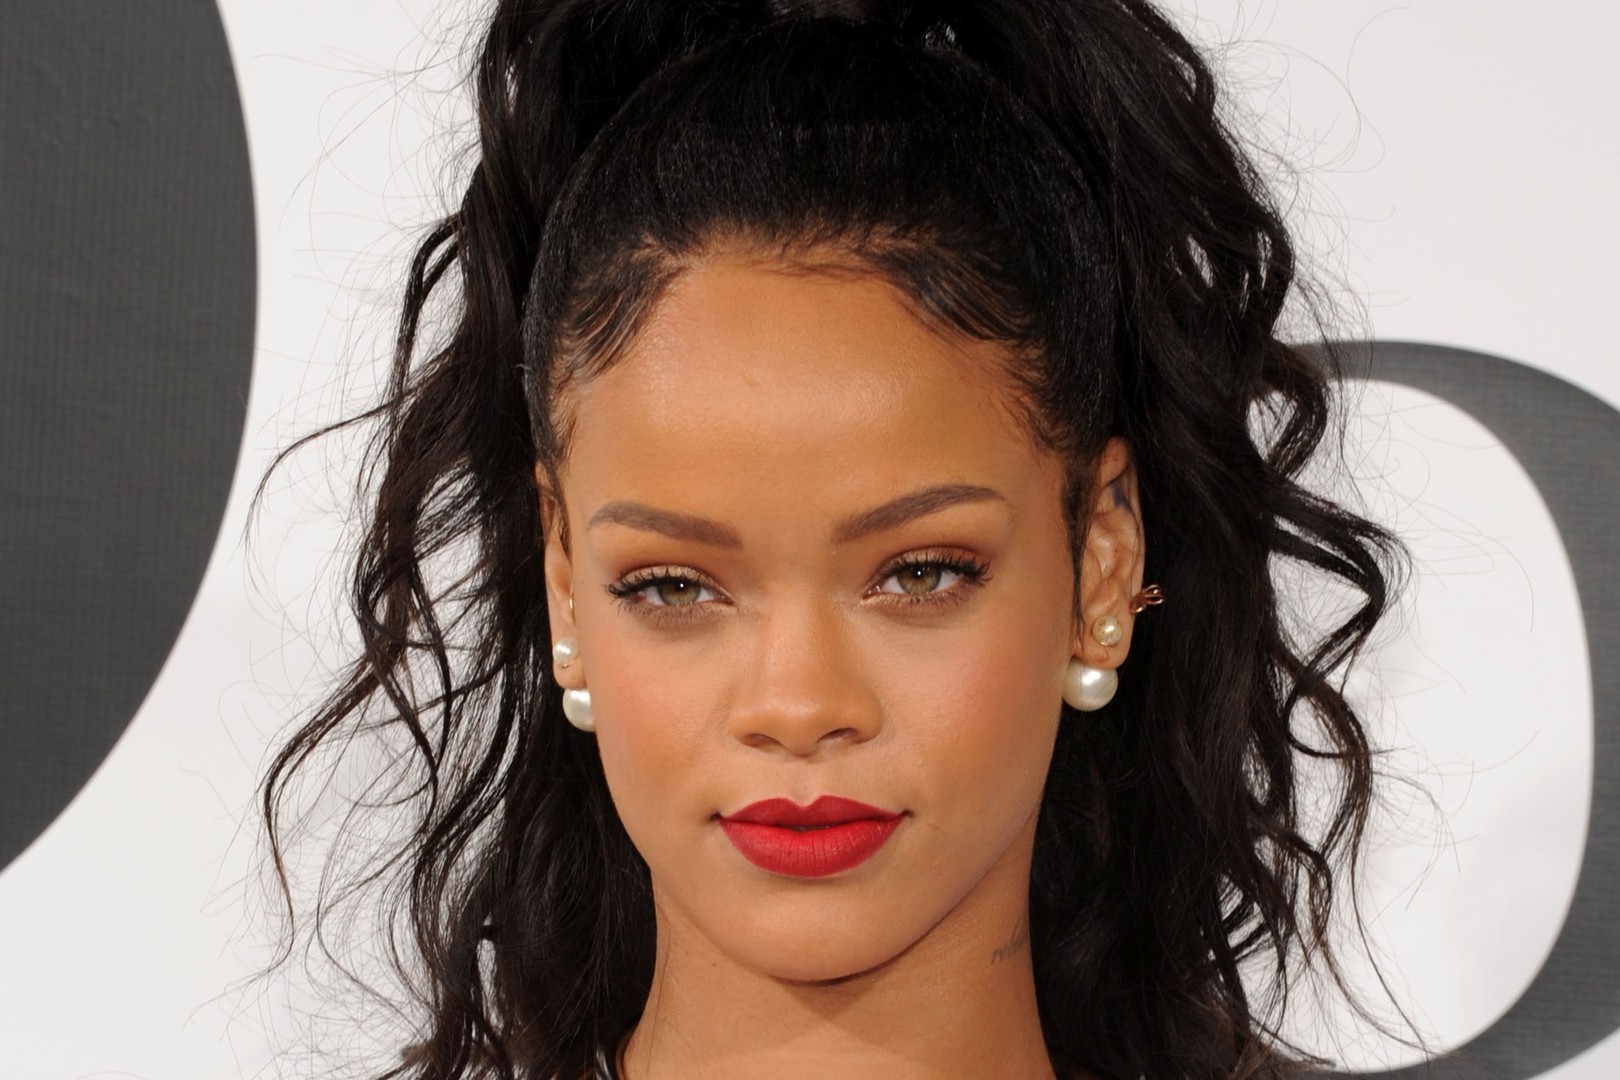 Rihanna [Image Source]